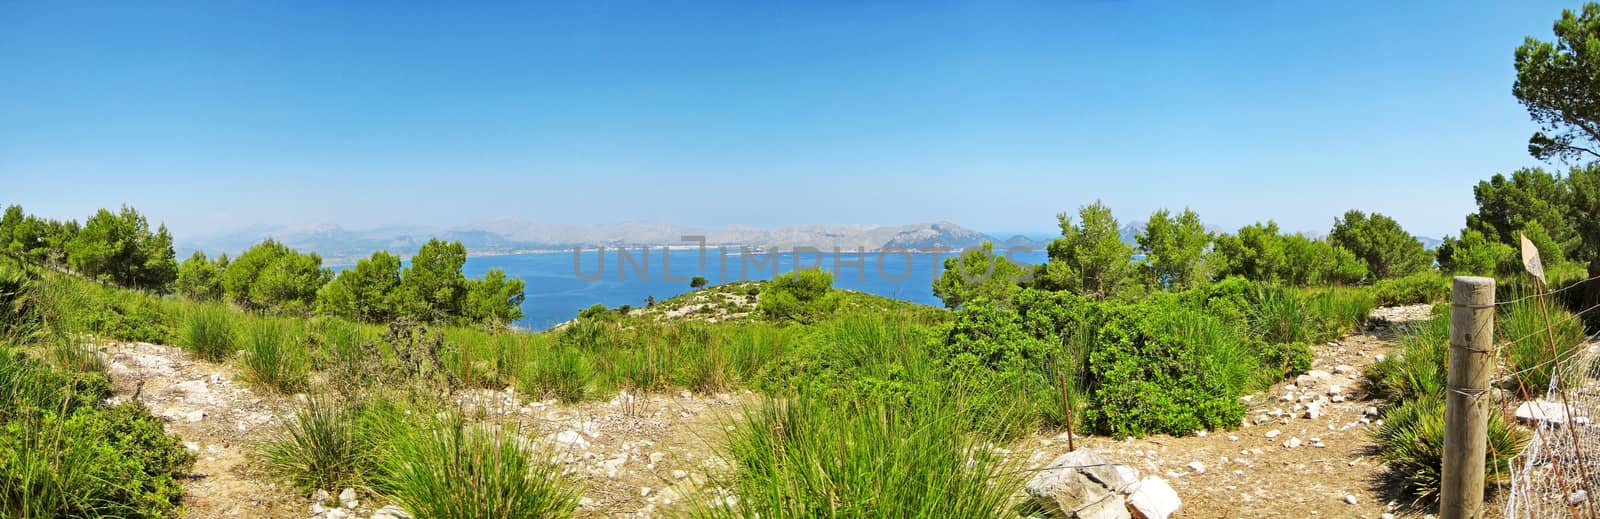 Bay of pollenca, Formentor peninsula - north coast of Majorca by aldorado